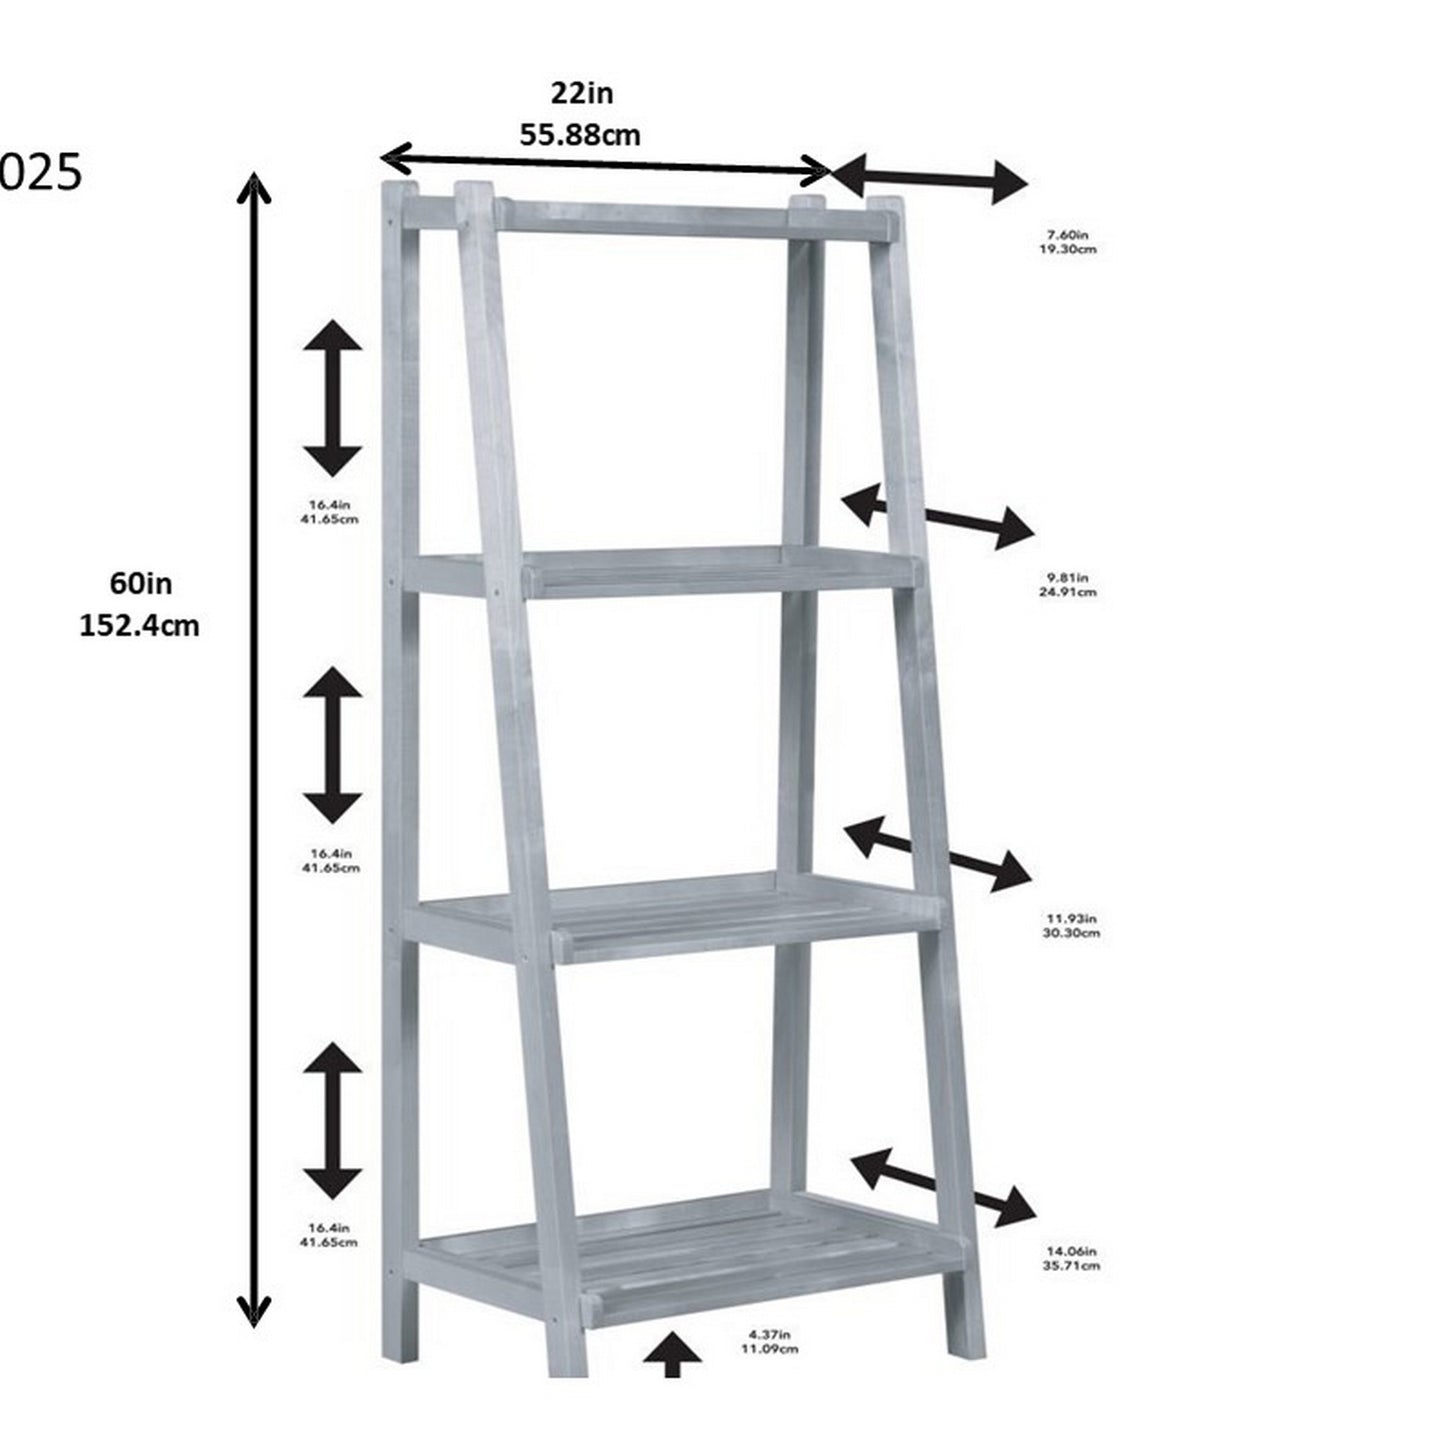 60" Leaning Ladder Bookshelf With 4 Shelves In Graphite